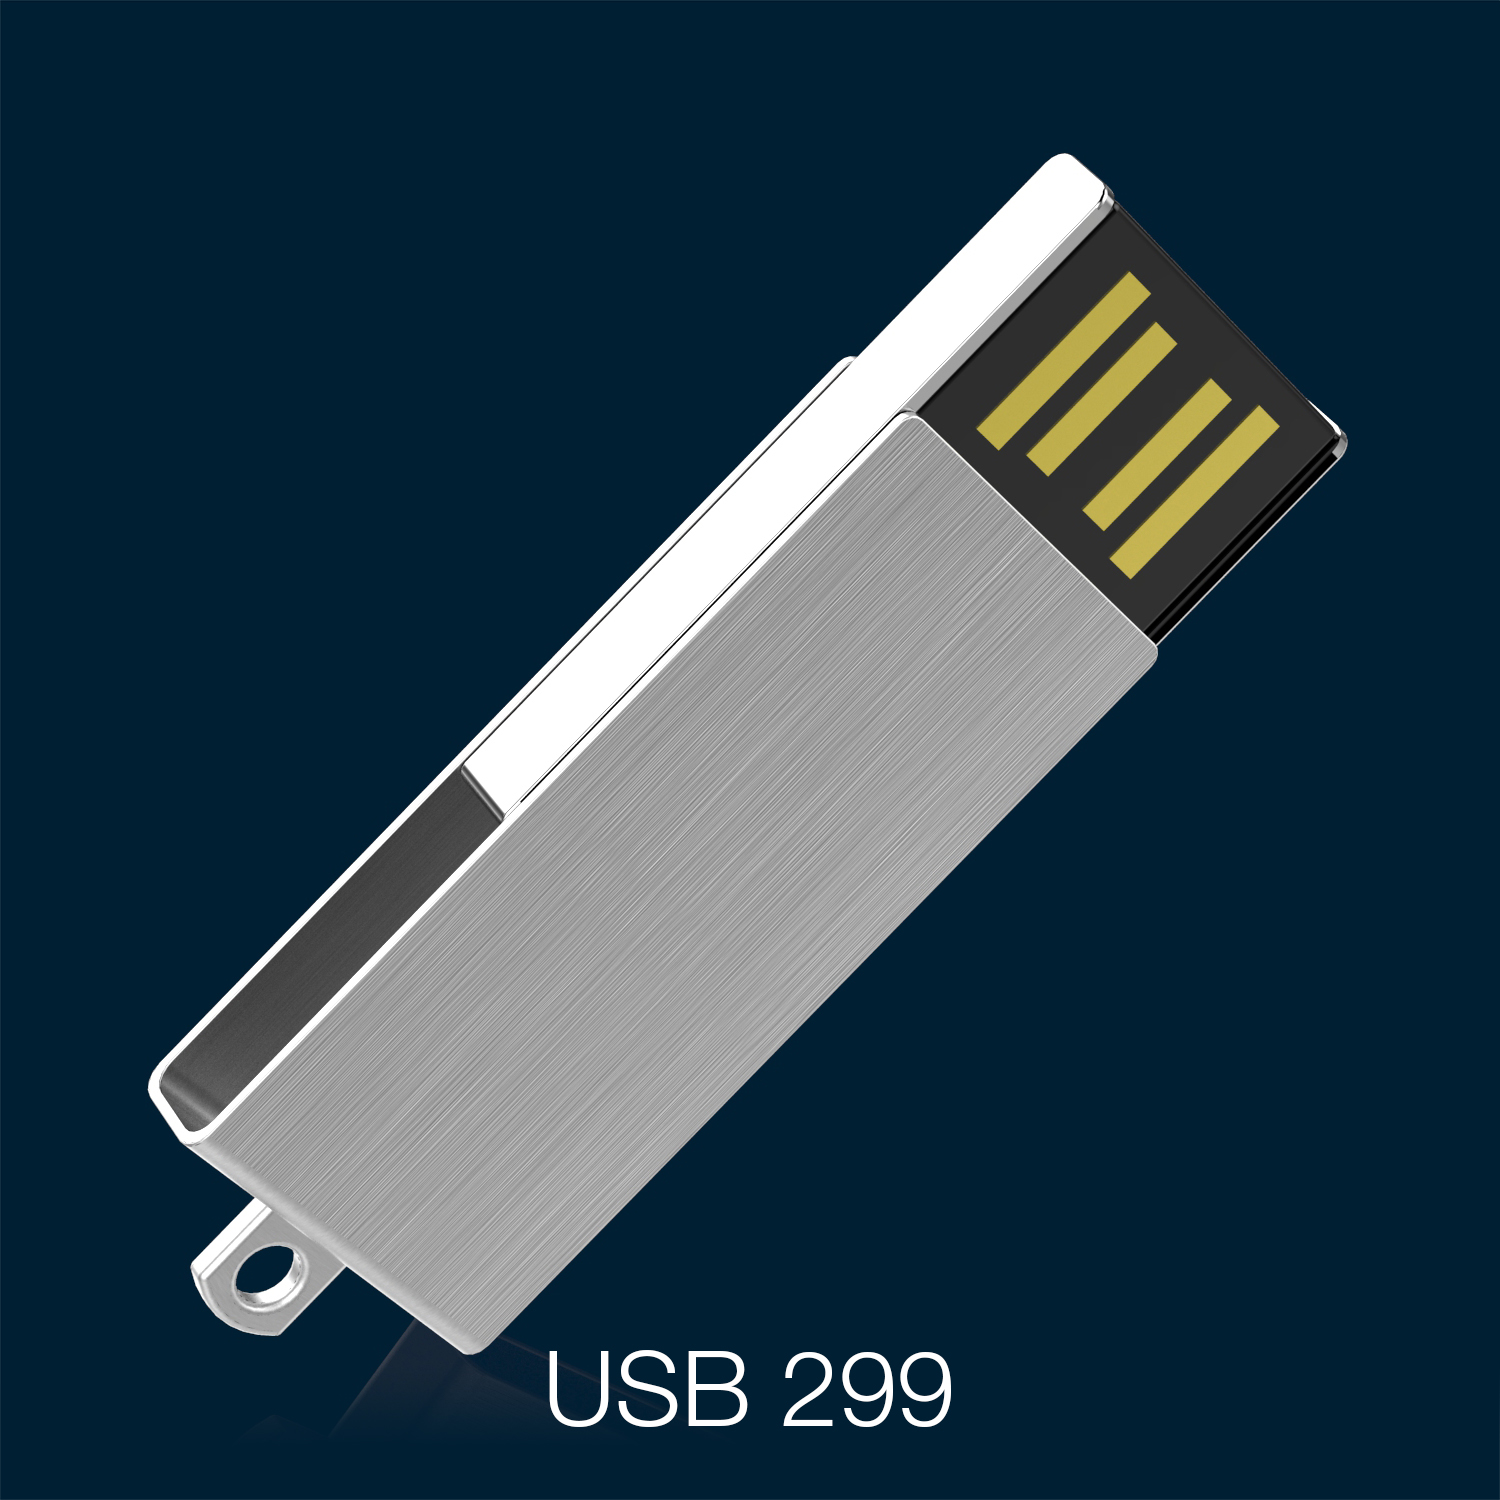 USB 299